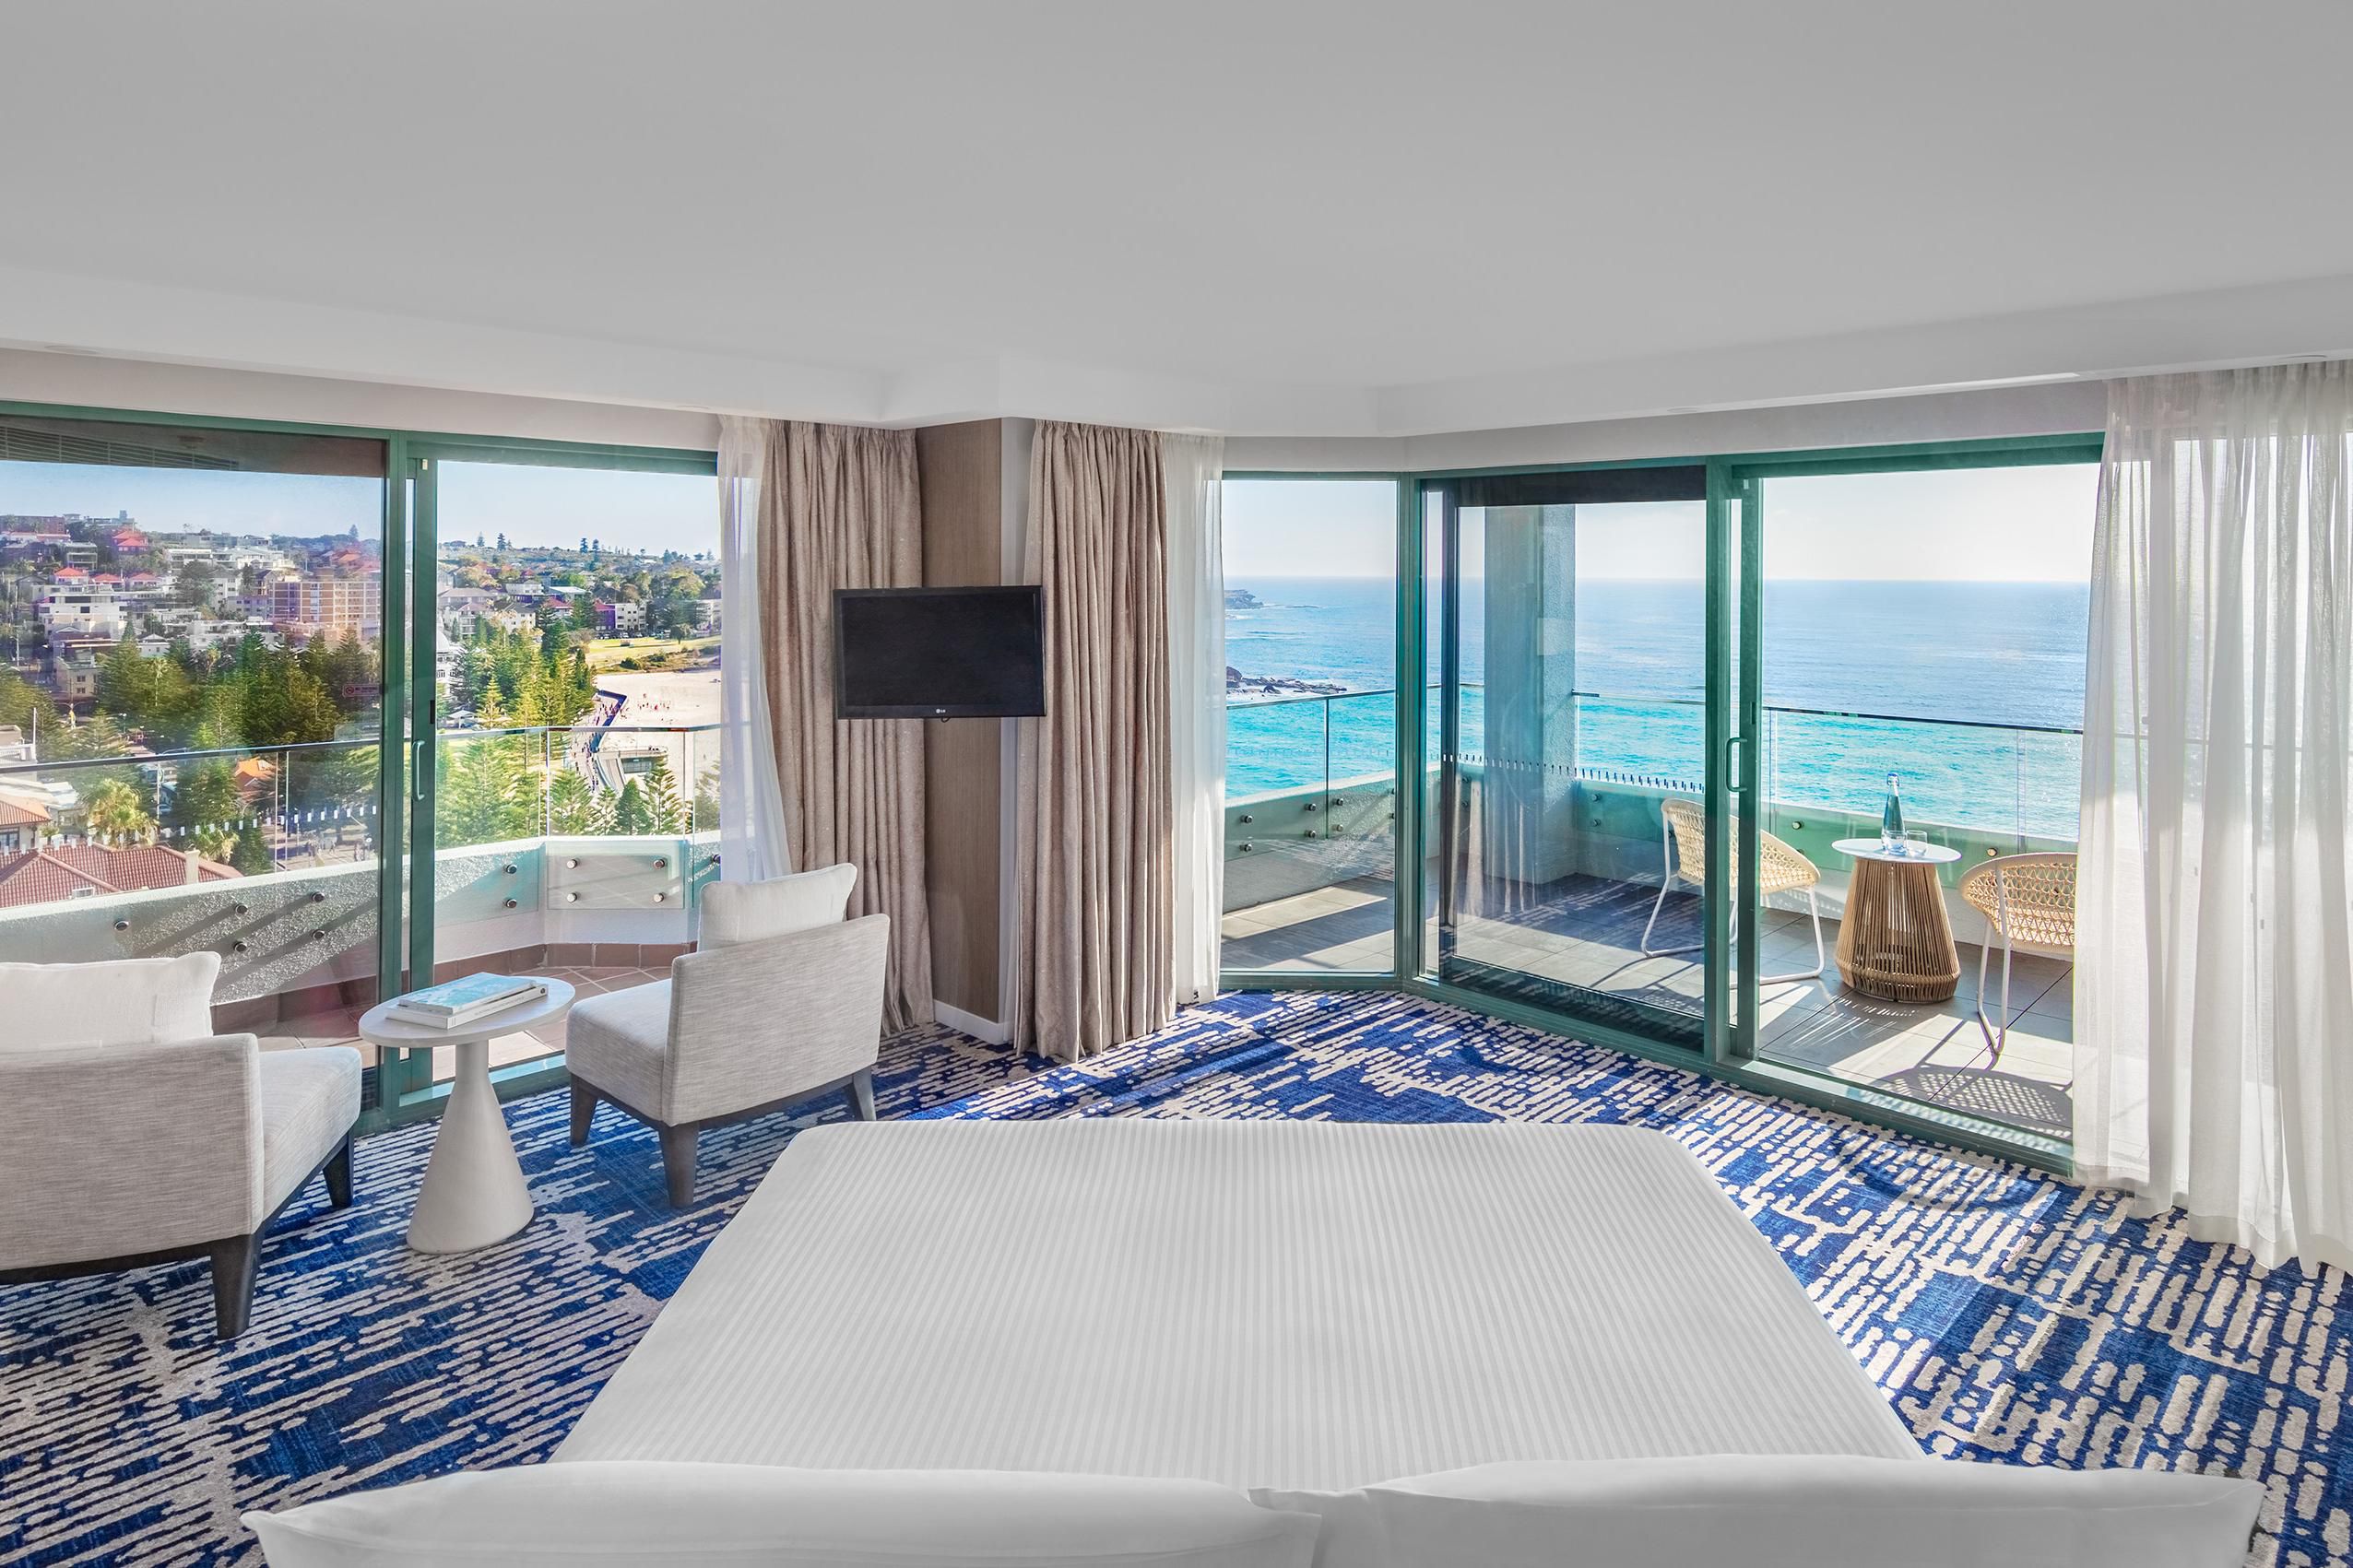 Reef Suite at Crowne Plaza Sydney Coogee Beach with ocean views